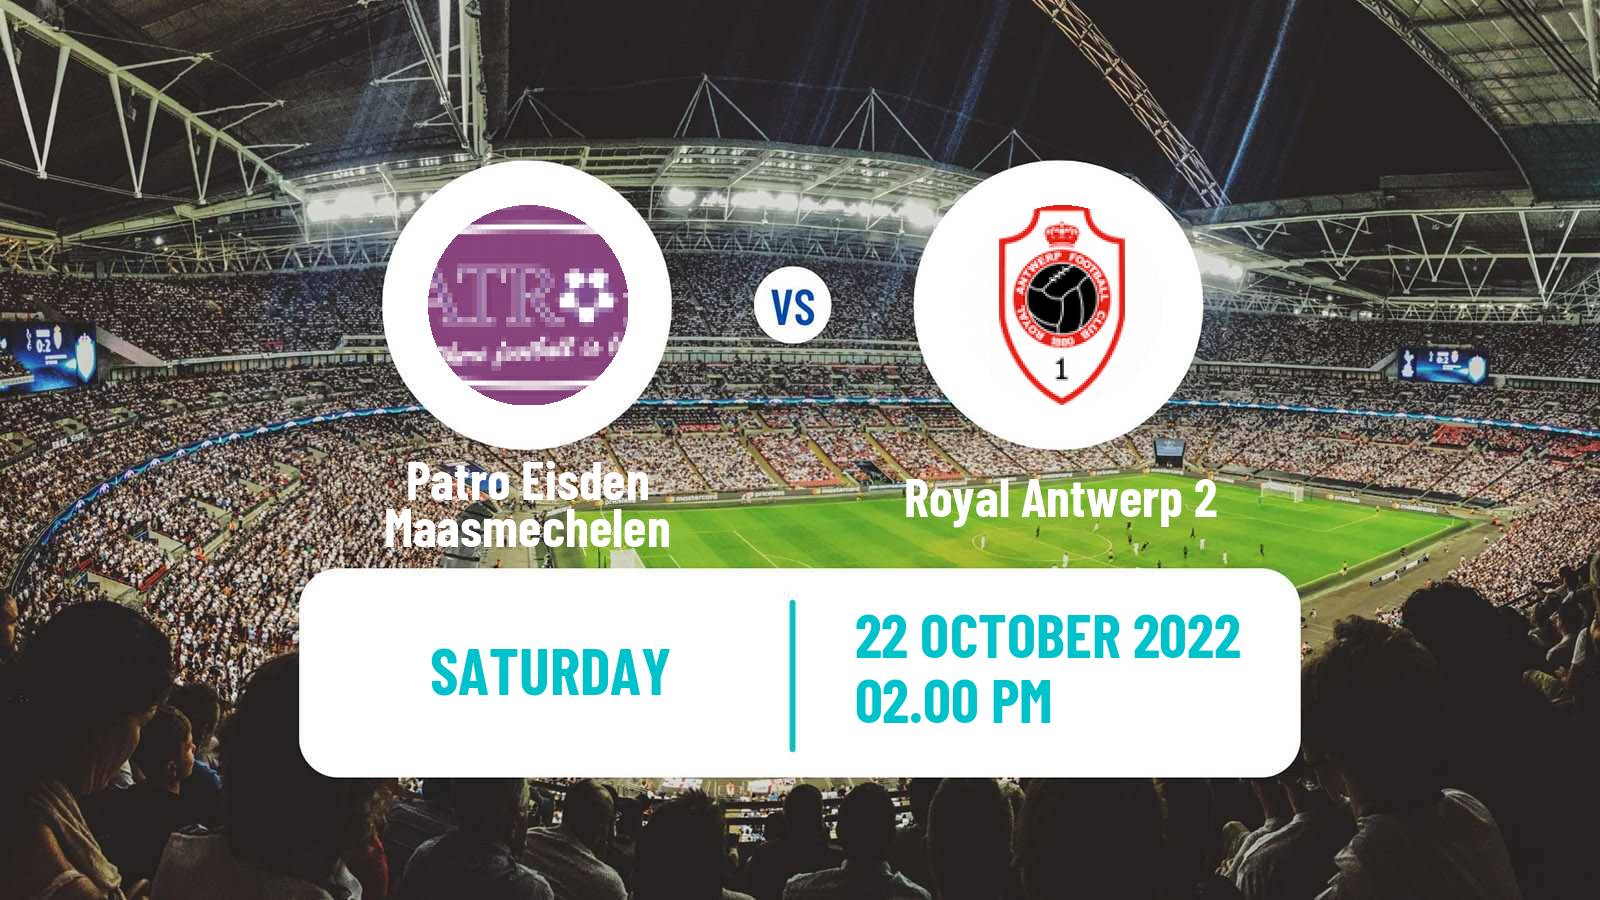 Soccer Belgian National Division 1 Patro Eisden Maasmechelen - Royal Antwerp 2